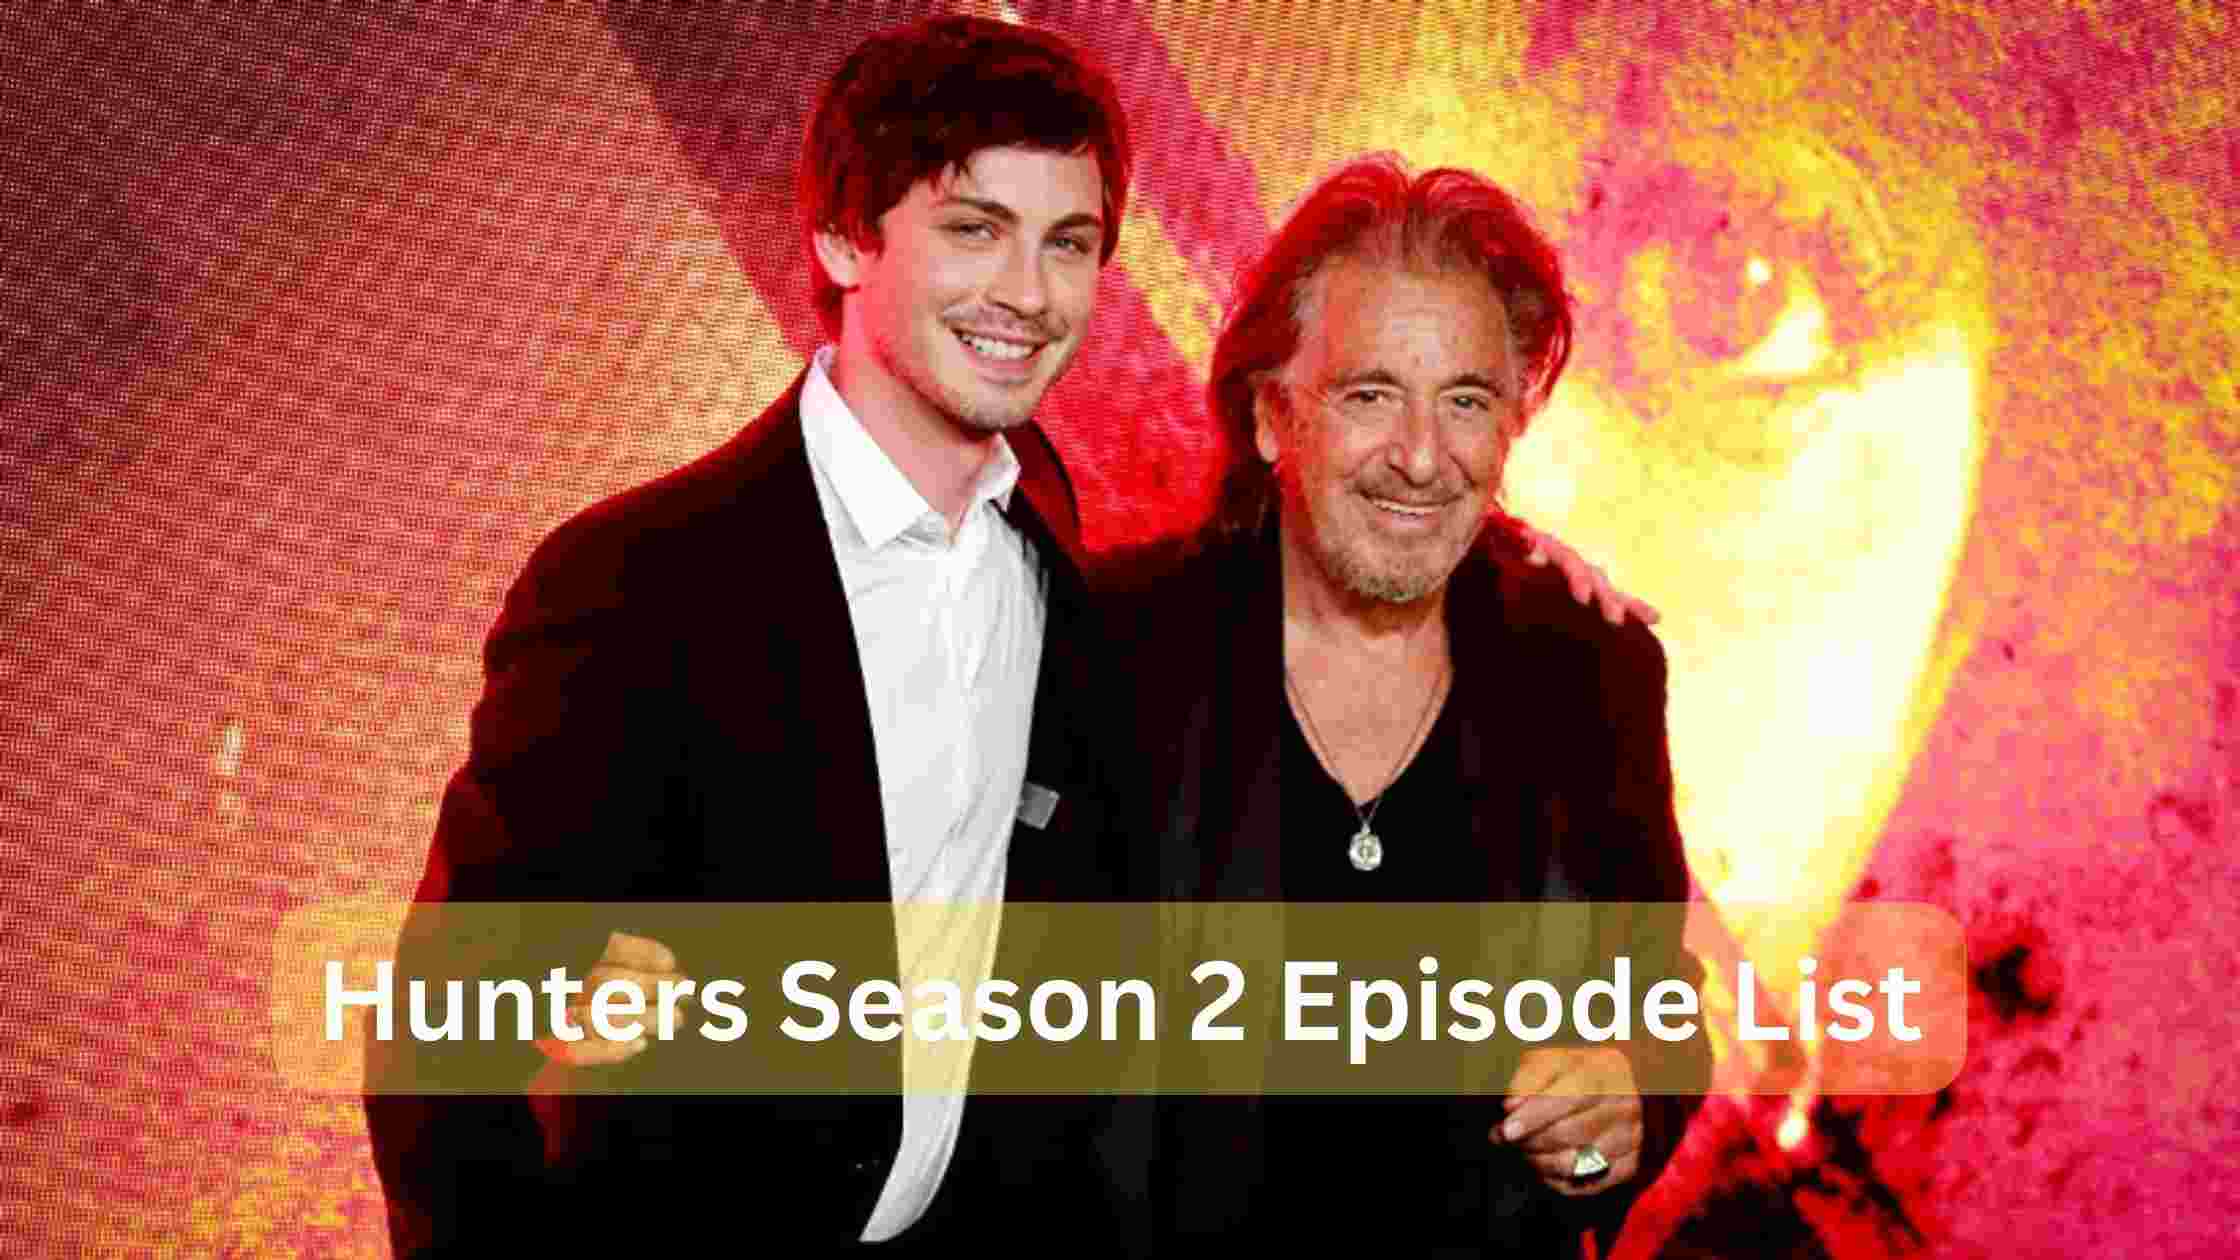 Hunters season 2 Episode list